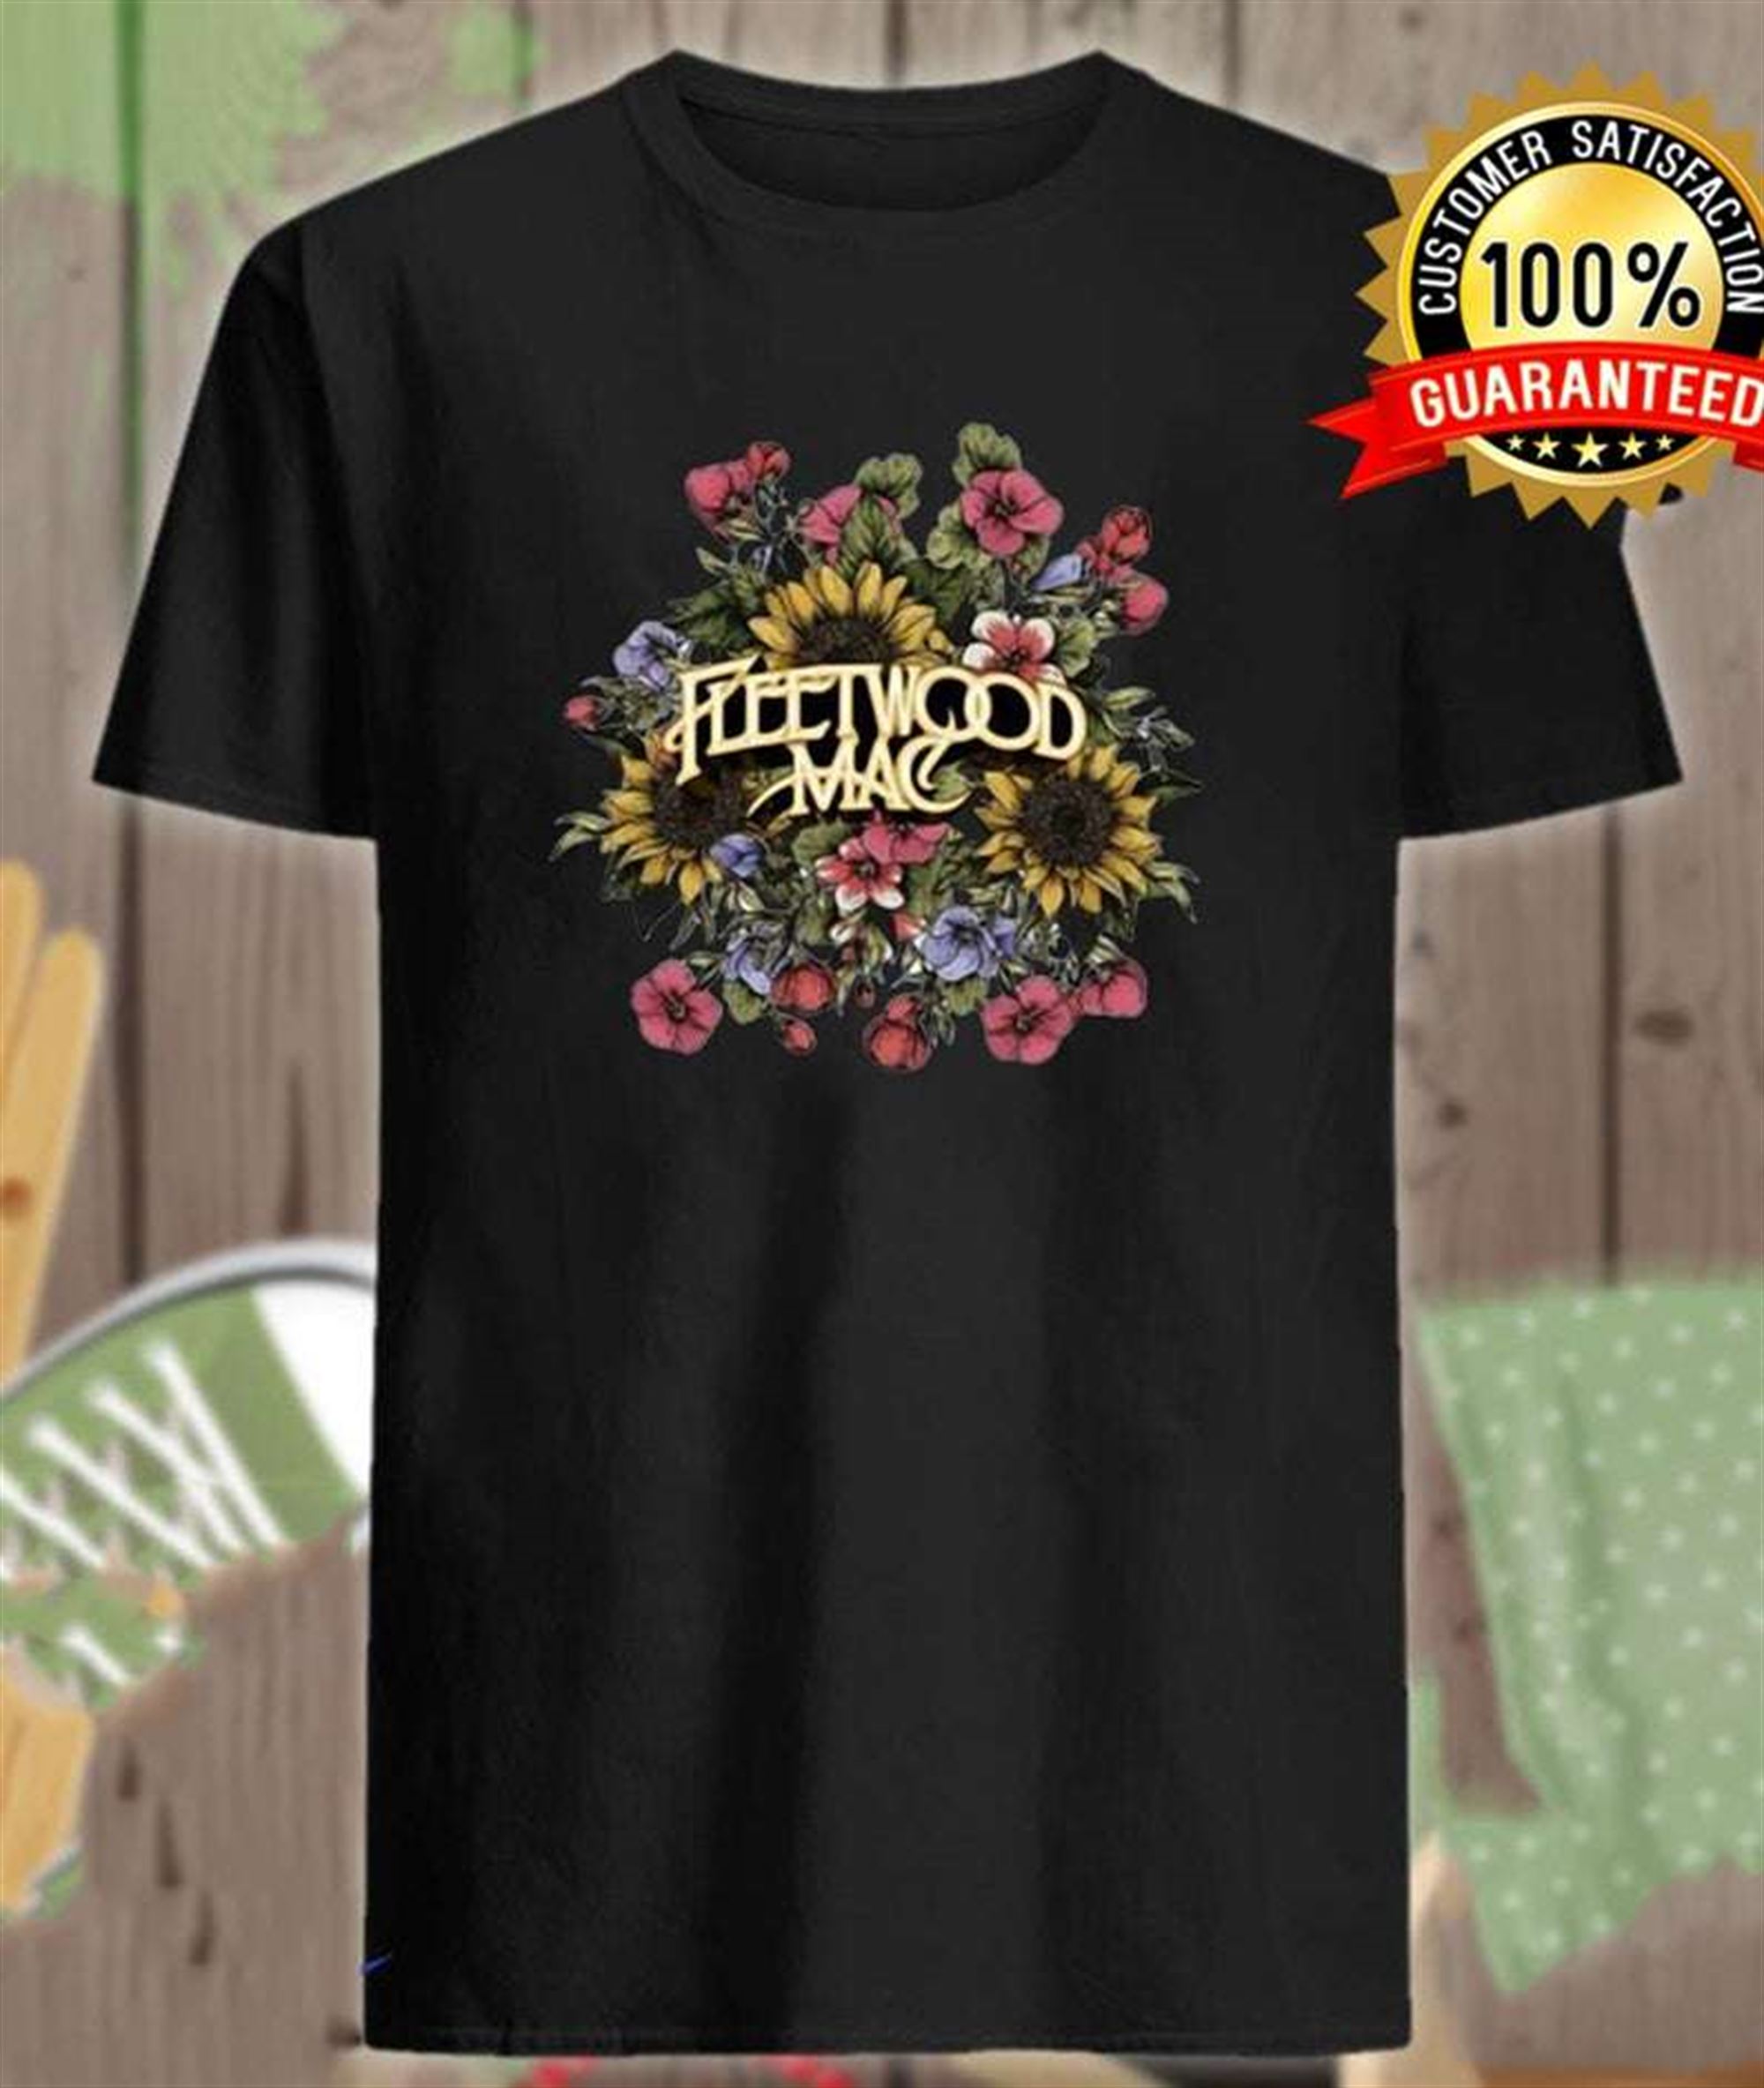 Fleetwood Mac Sunflower Vintage Raglan T Shirt Size Up To 5xl